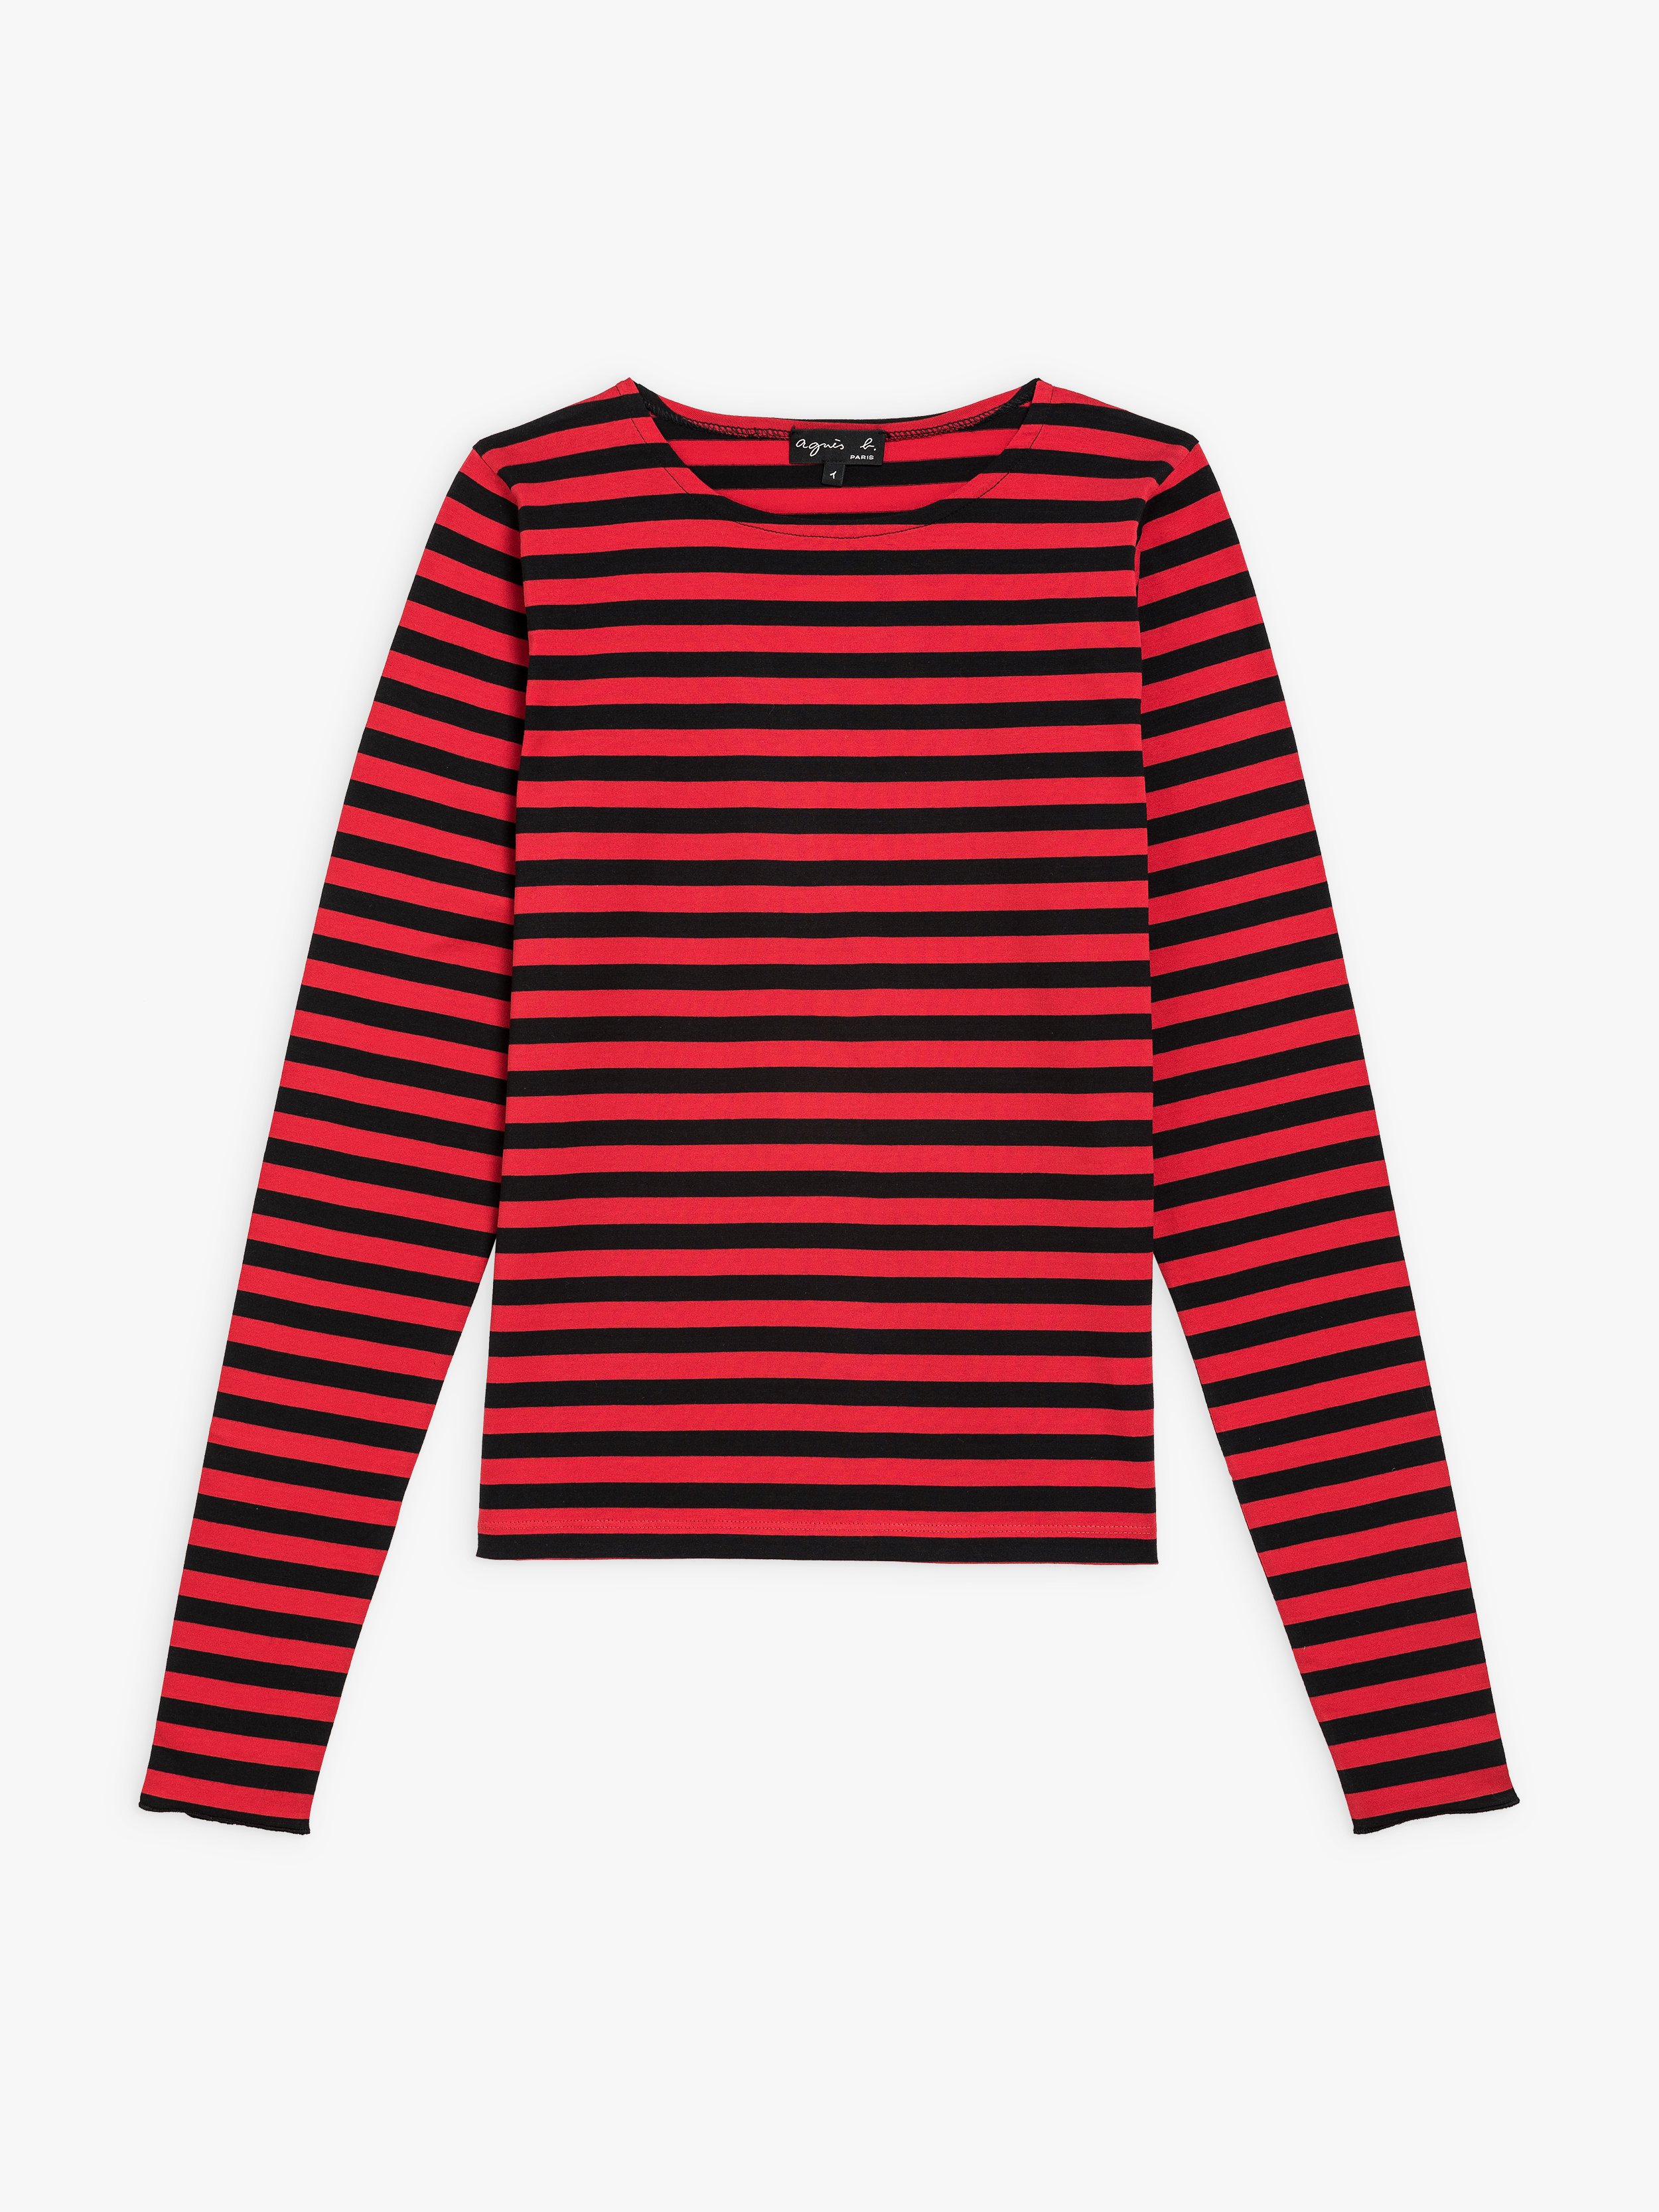 red white black striped shirt